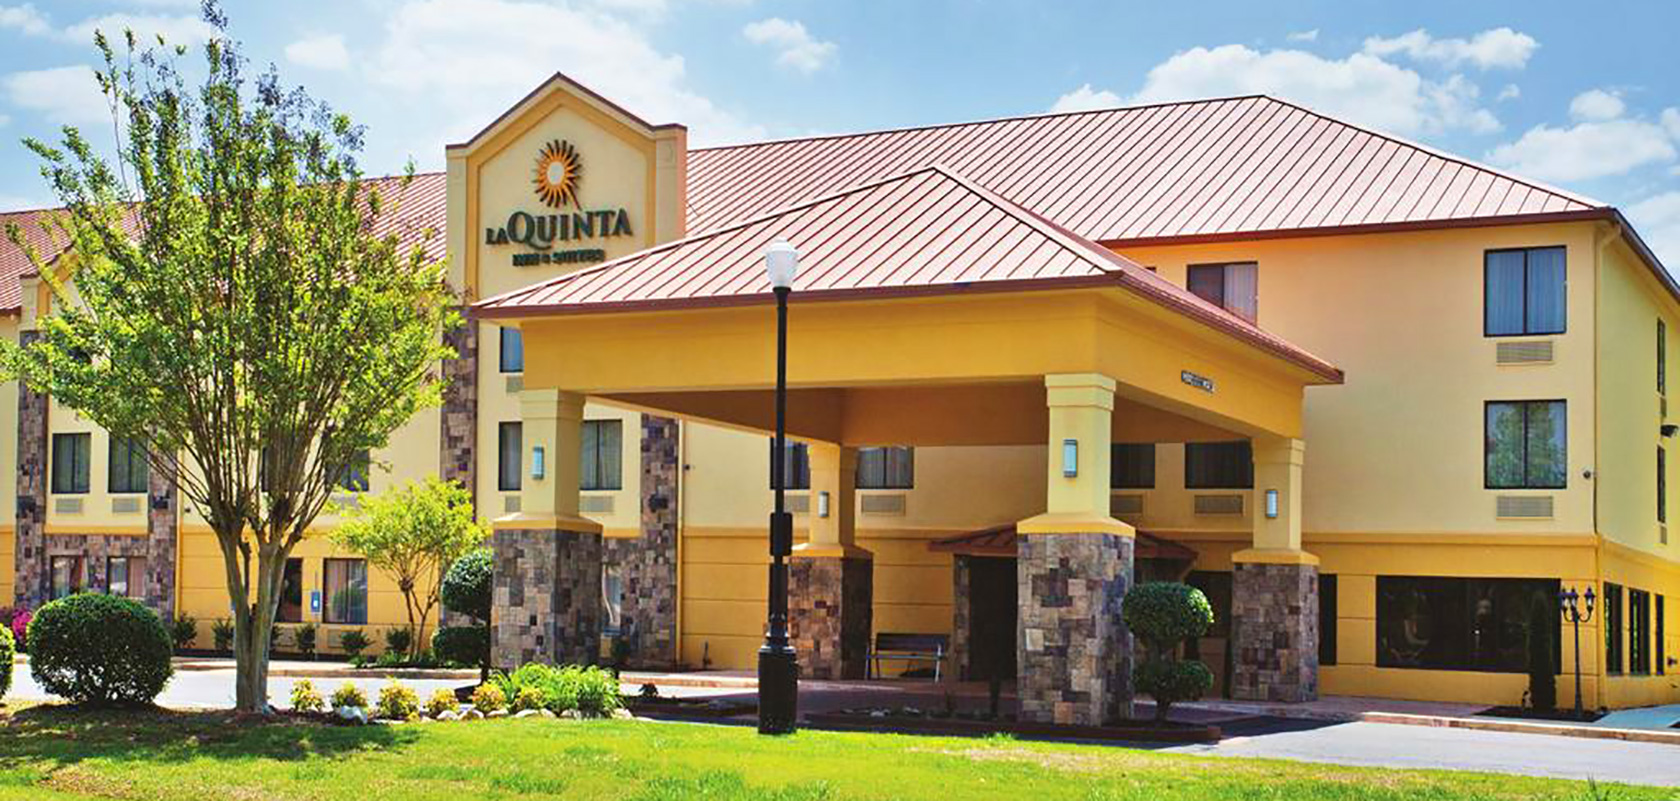 La-Quinta-hotel-lagrange-lodging-travel